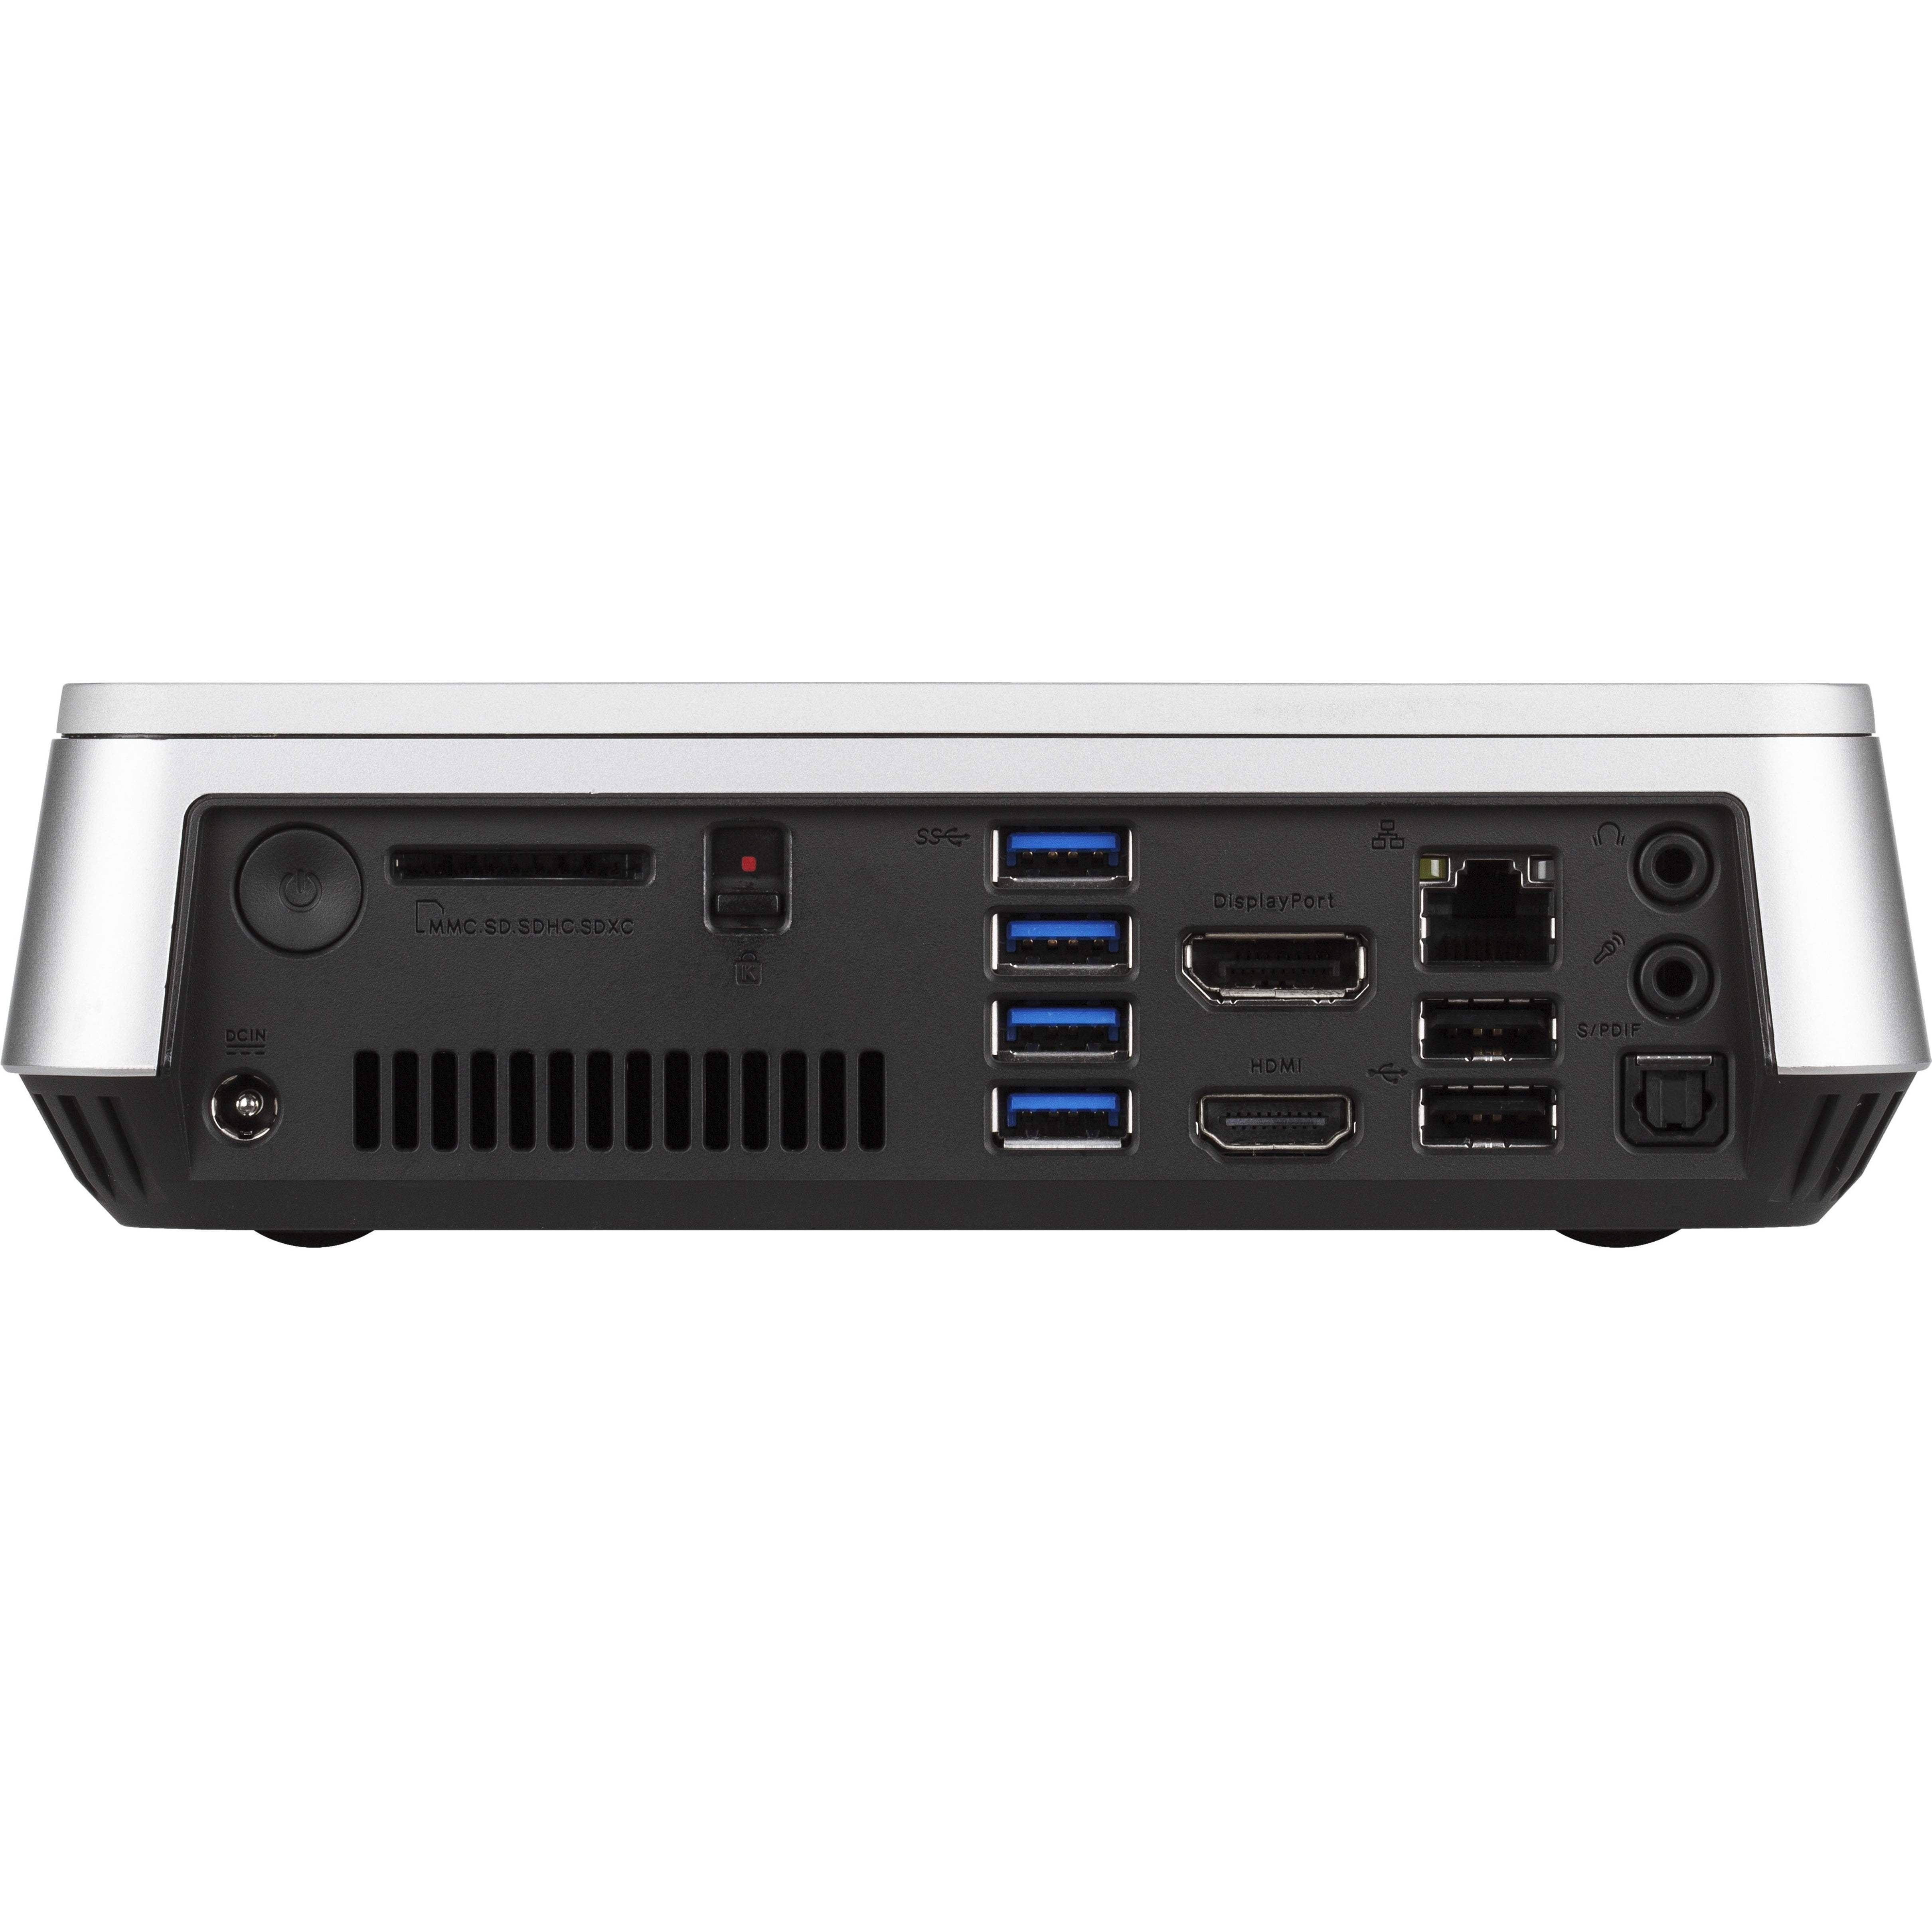 Asus VivoPC Desktop Computer, Intel Celeron 2957U (2 Core) 1.40 4 GB RAM DDR3L SDRAM, 500 GB HDD, Mini PC, - Walmart.com